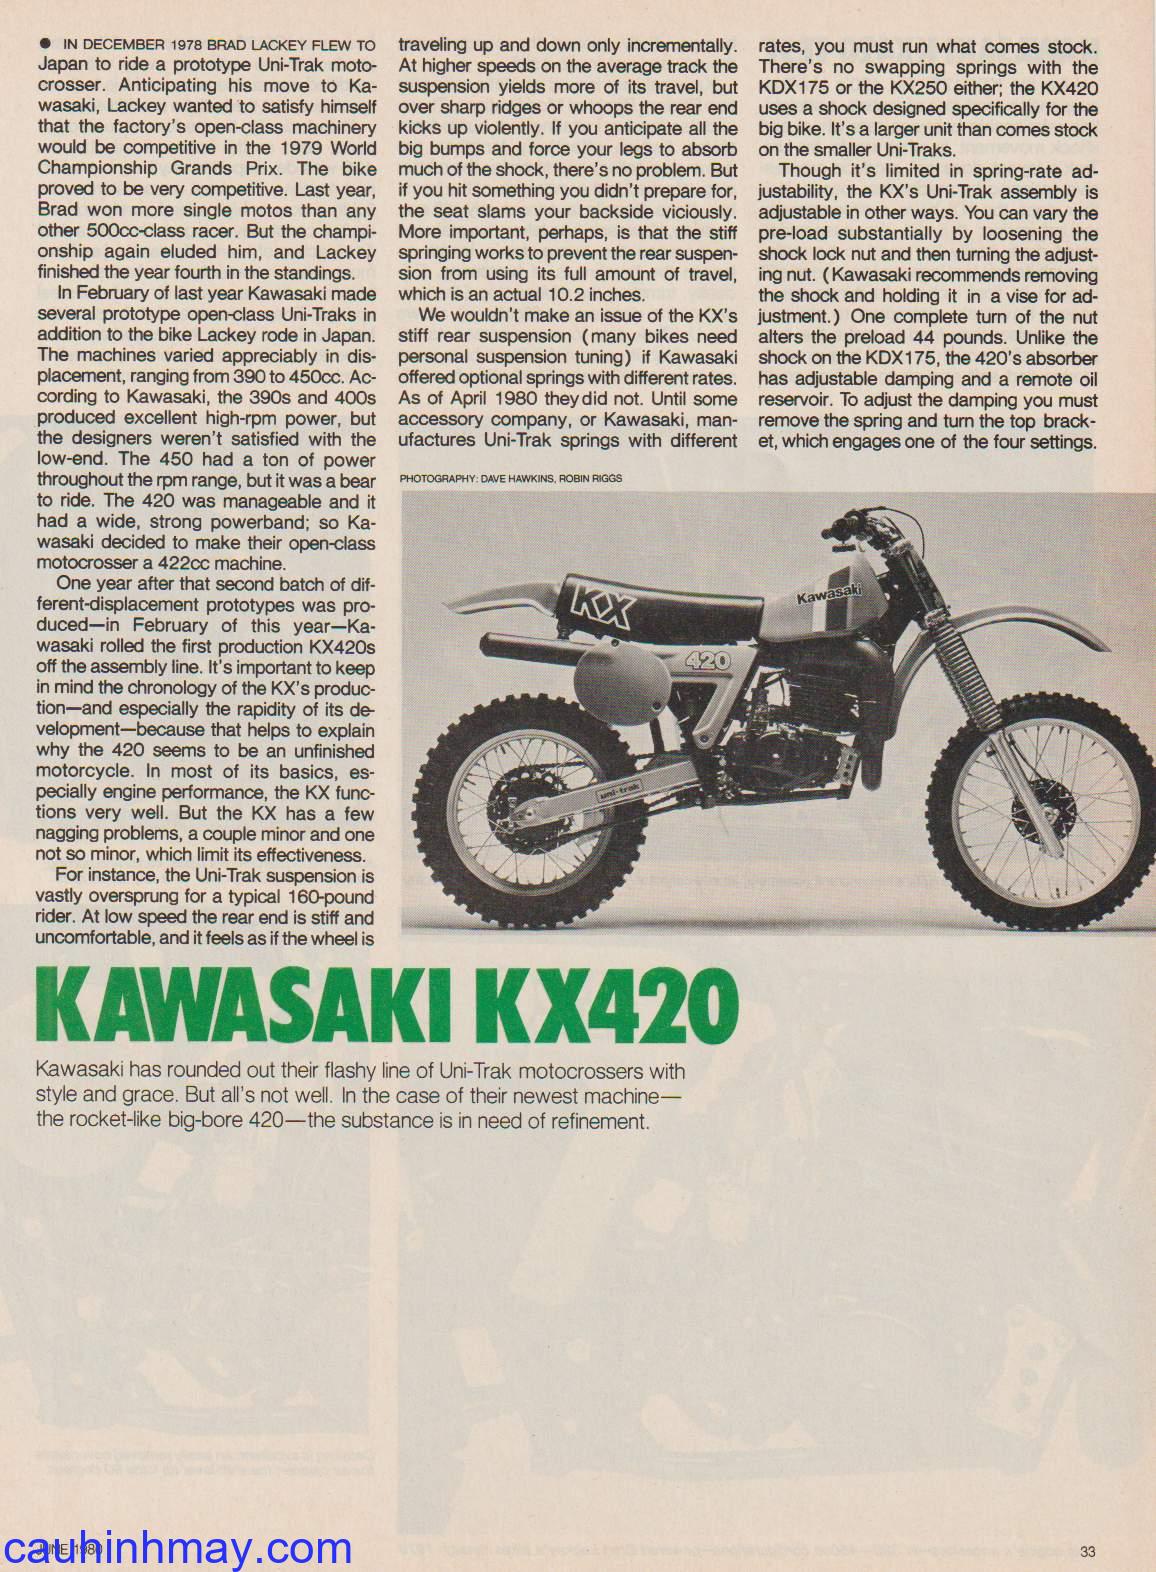 1980 KAWASAKI KX 420 - cauhinhmay.com